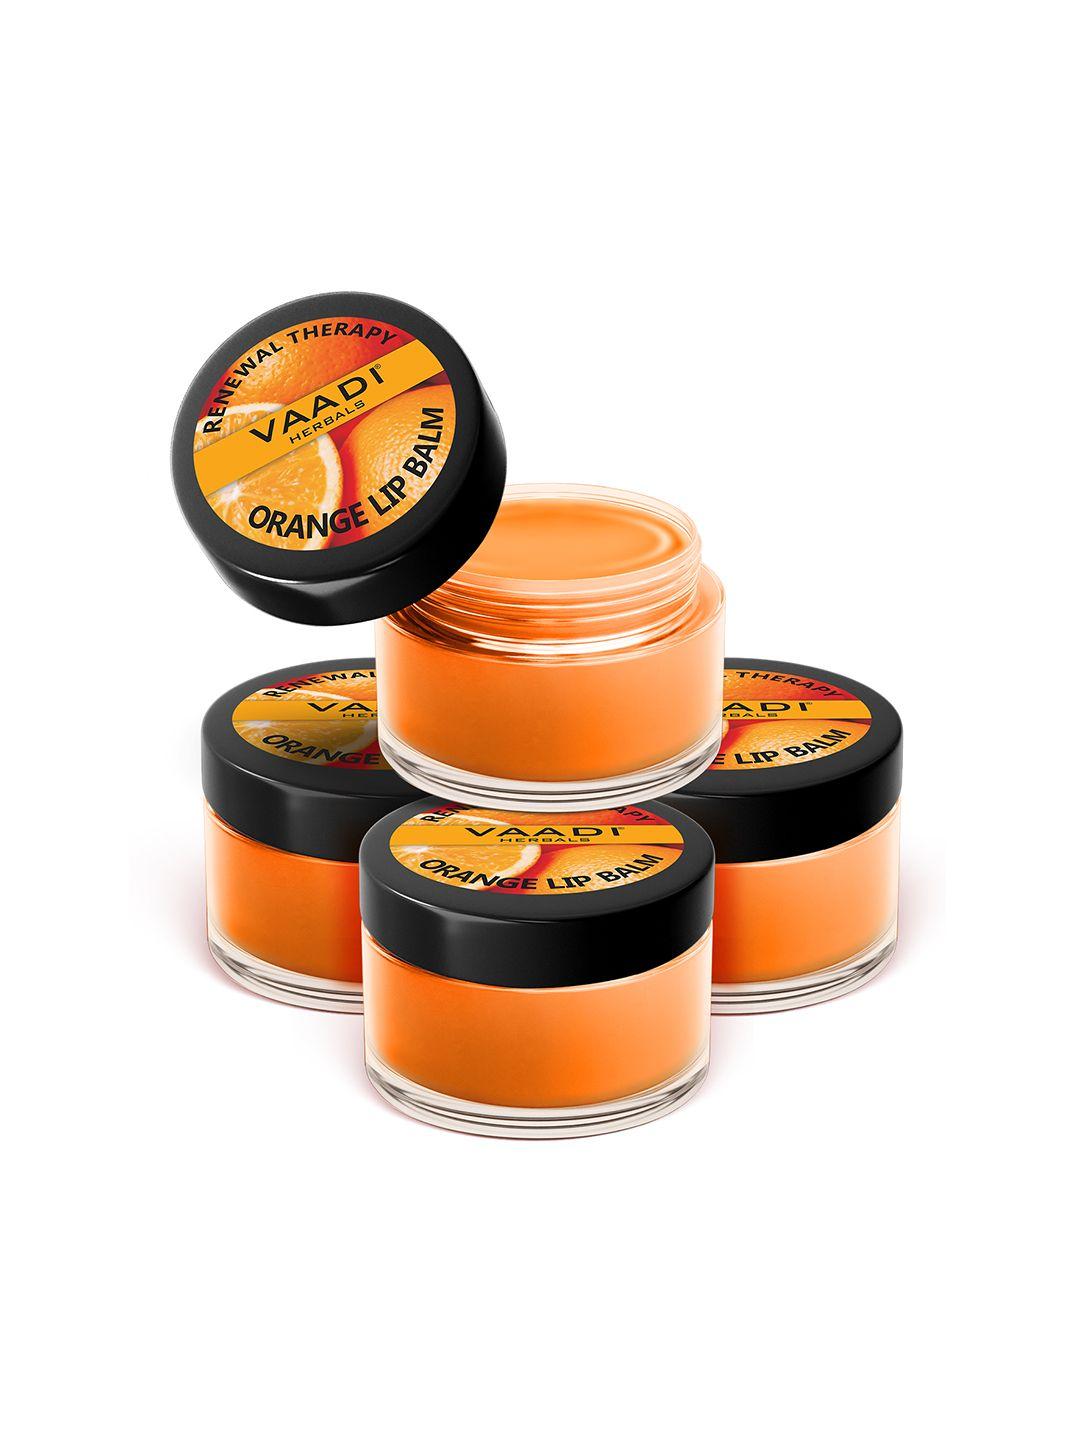 vaadi herbals unisex value pack of 4 orange & shea butter lip balm 10 g each